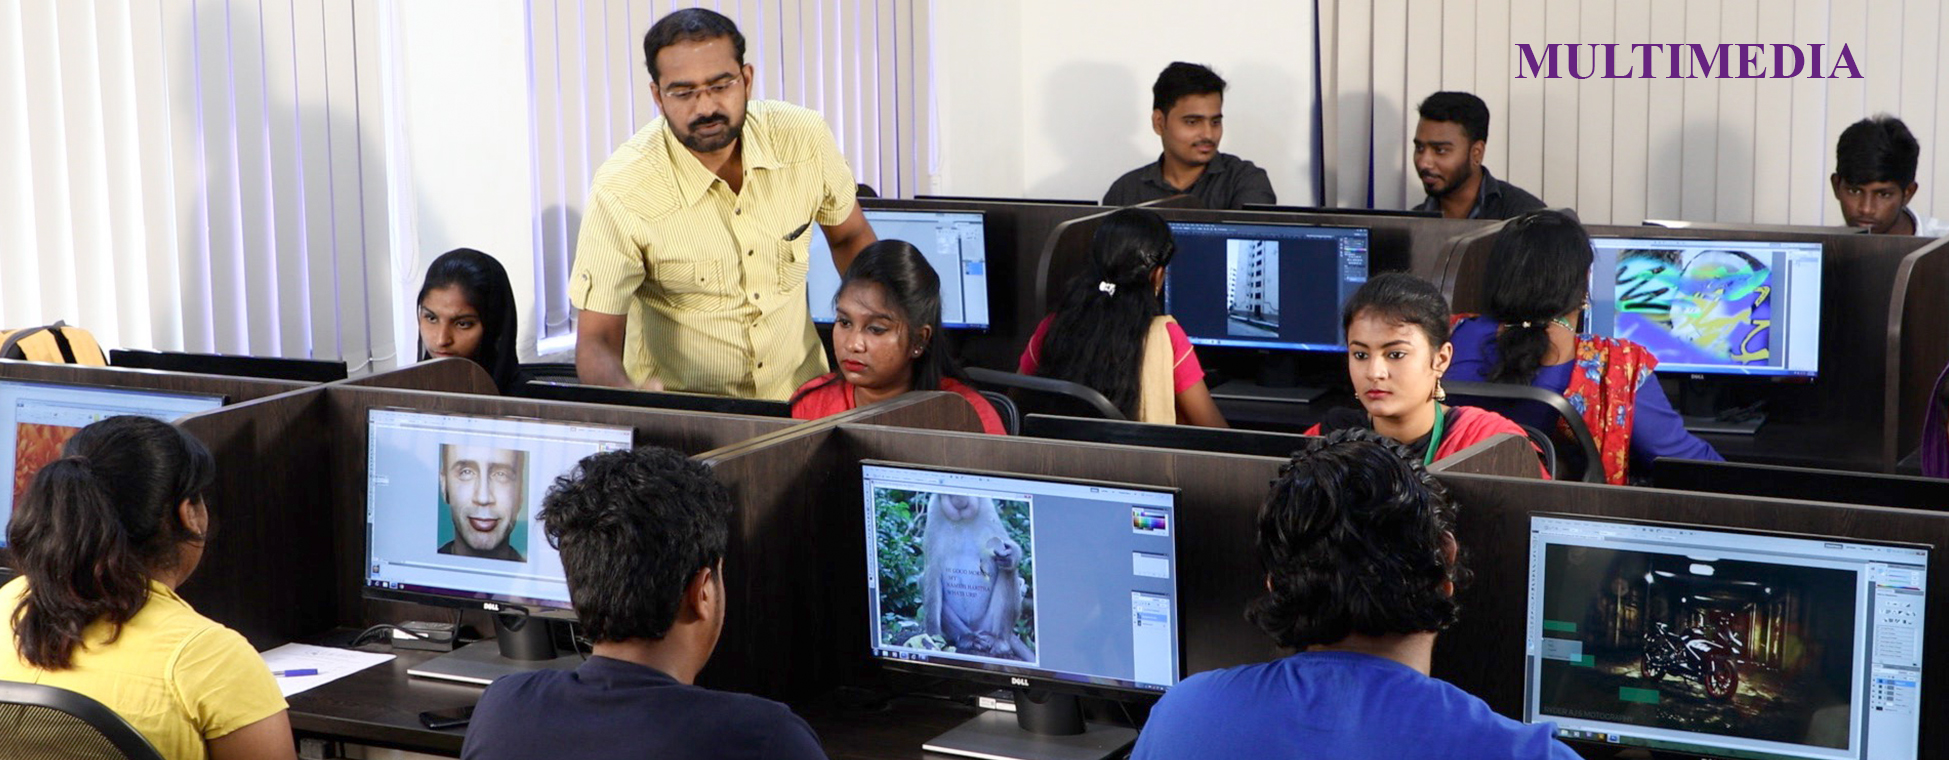 multimedia courses in chennai